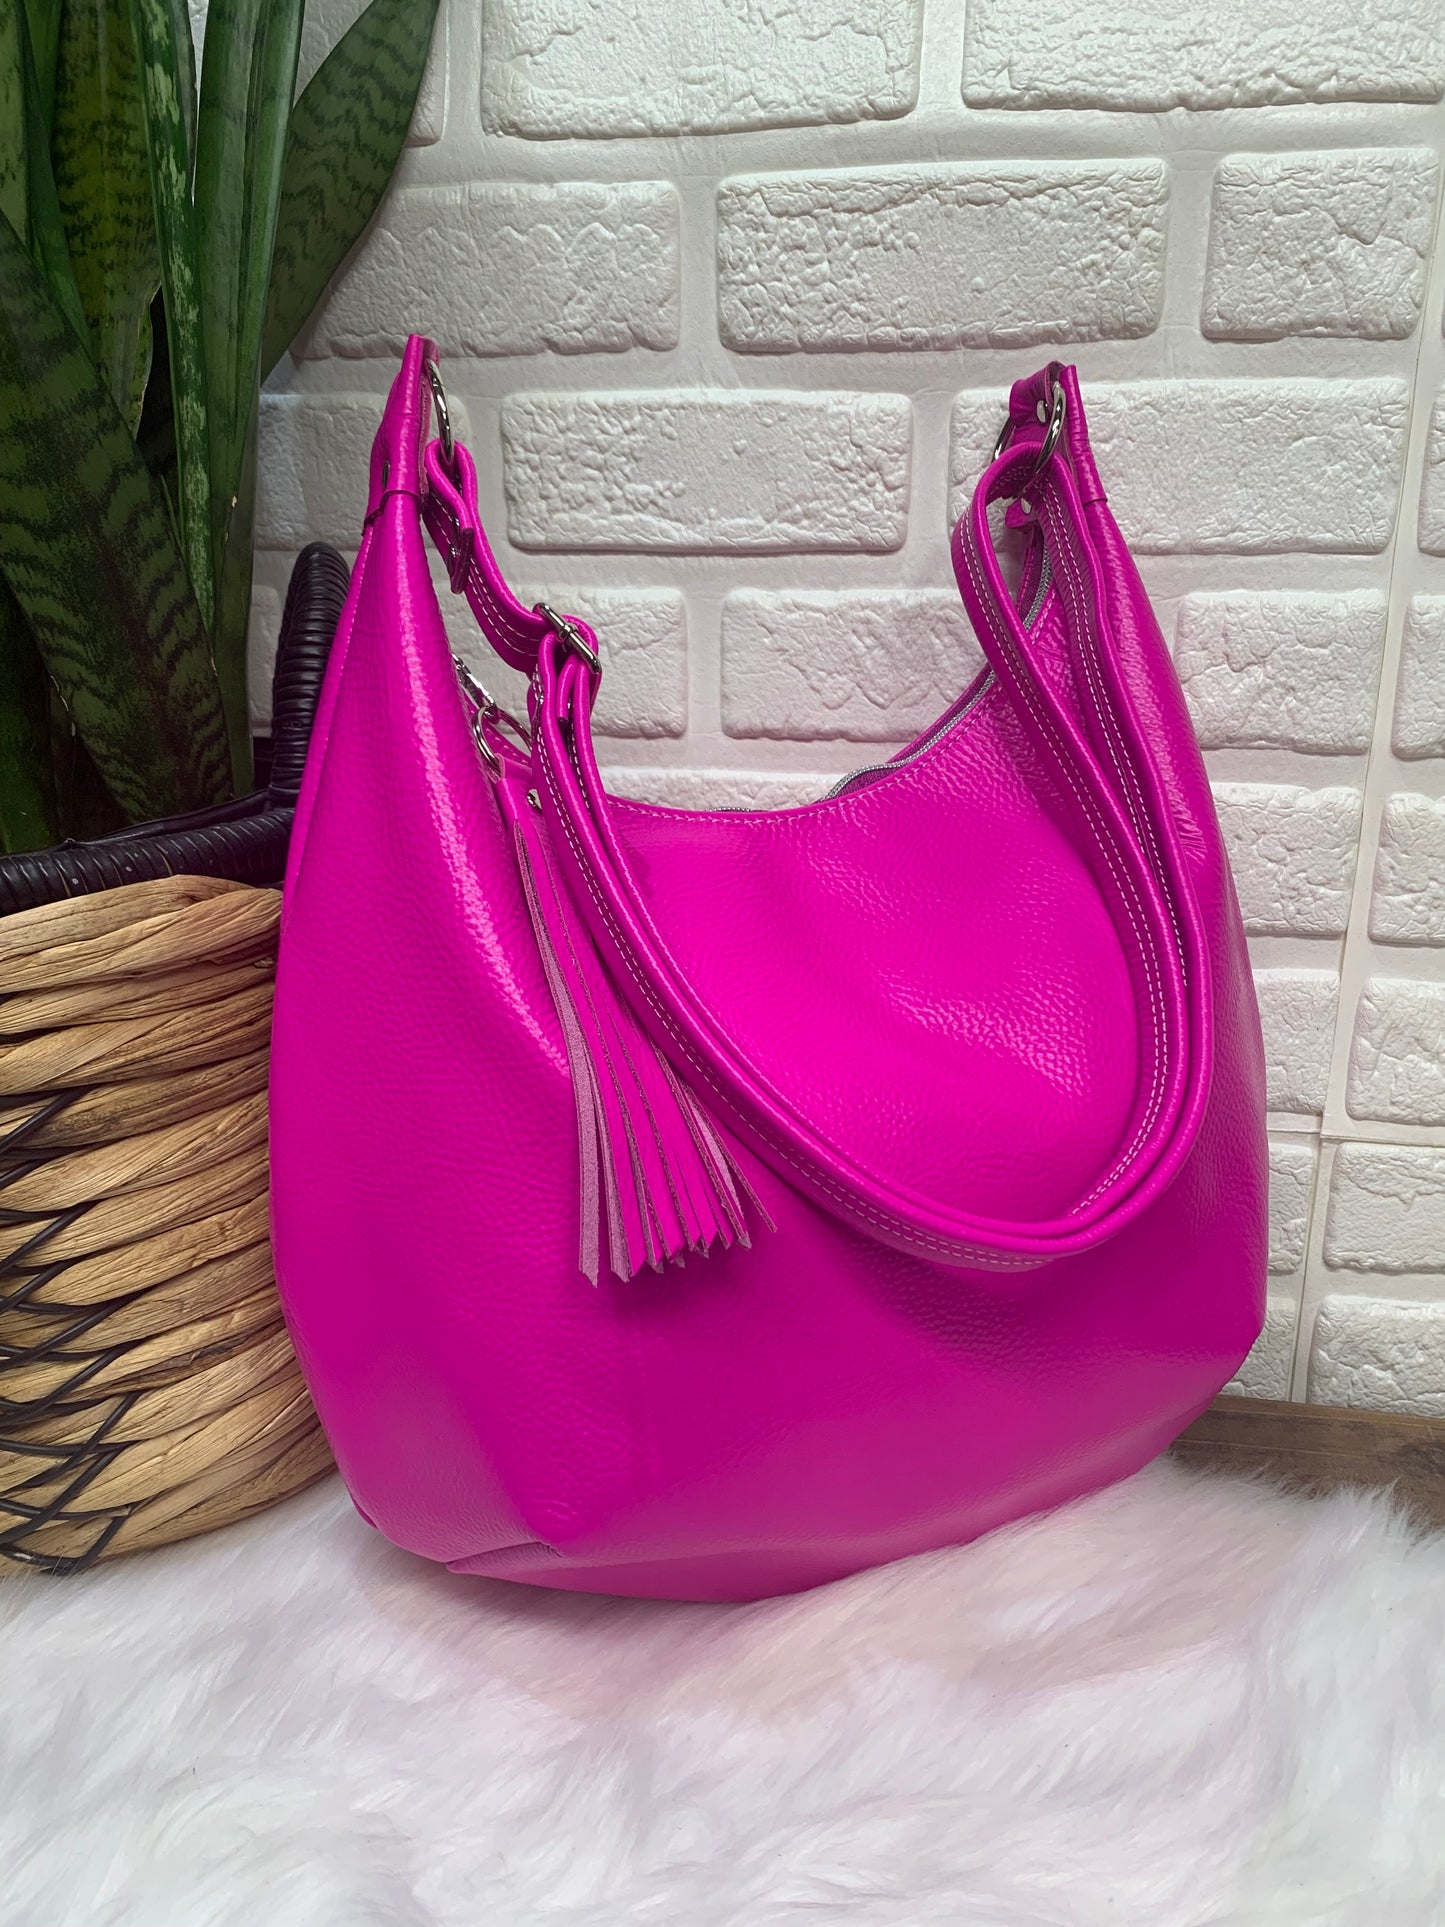 Dream Pink leather hobo bag